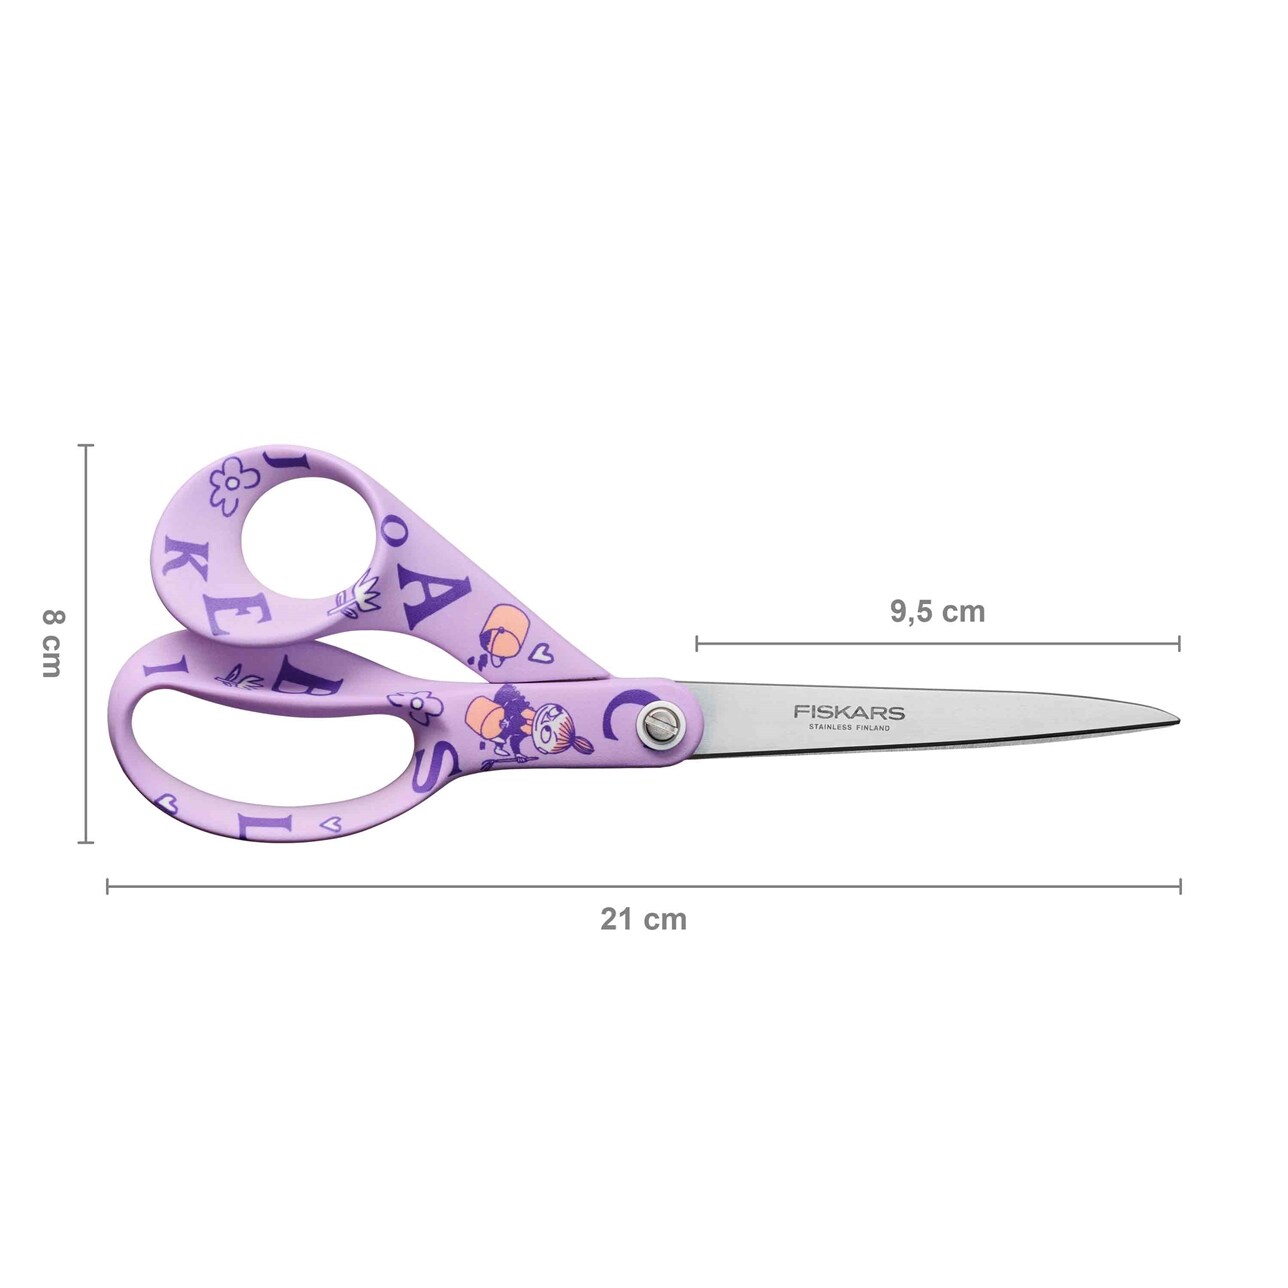 Fiskars x Moomin Scissor 21 cm, ABC - Fiskars @ RoyalDesign